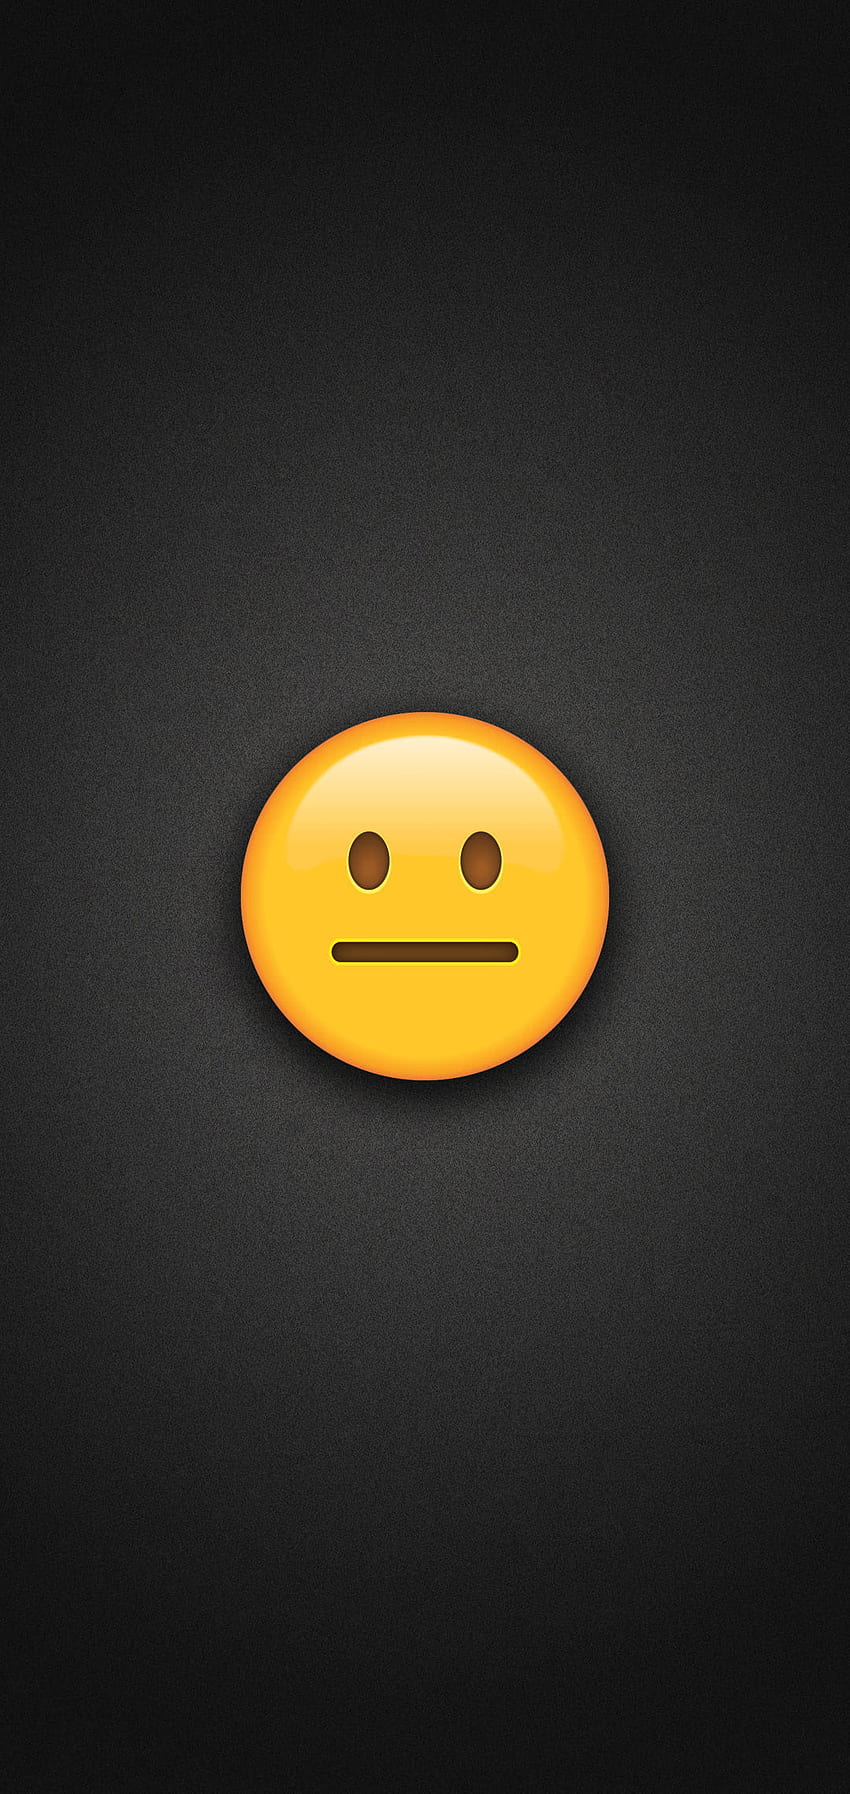 3840x2160px, 4K Free download | Emoji Neutral Face Emoji Phone 14 ...